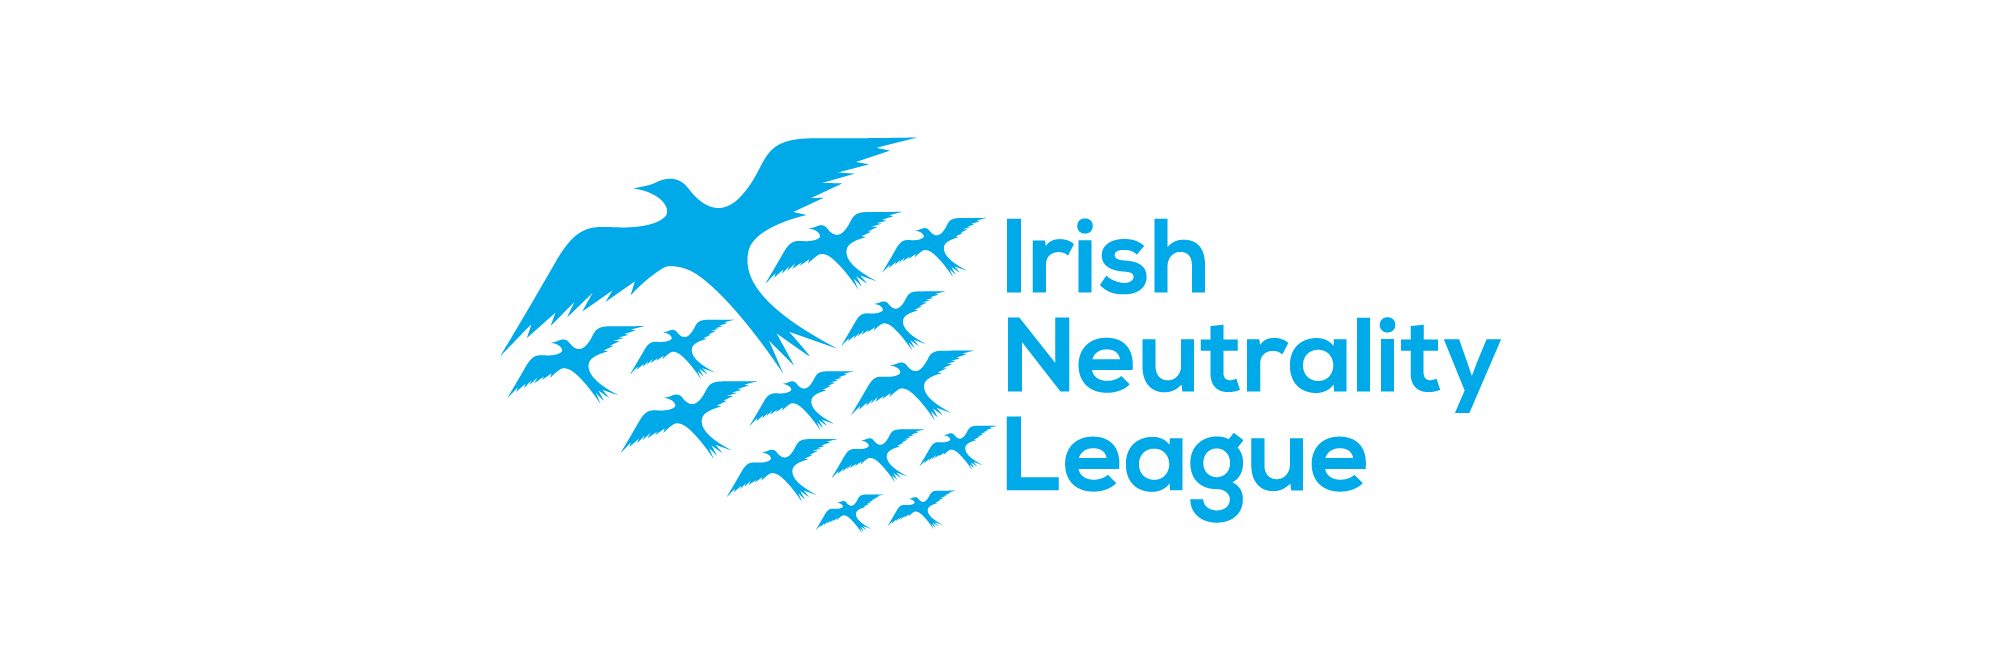 Irish Neutrality League